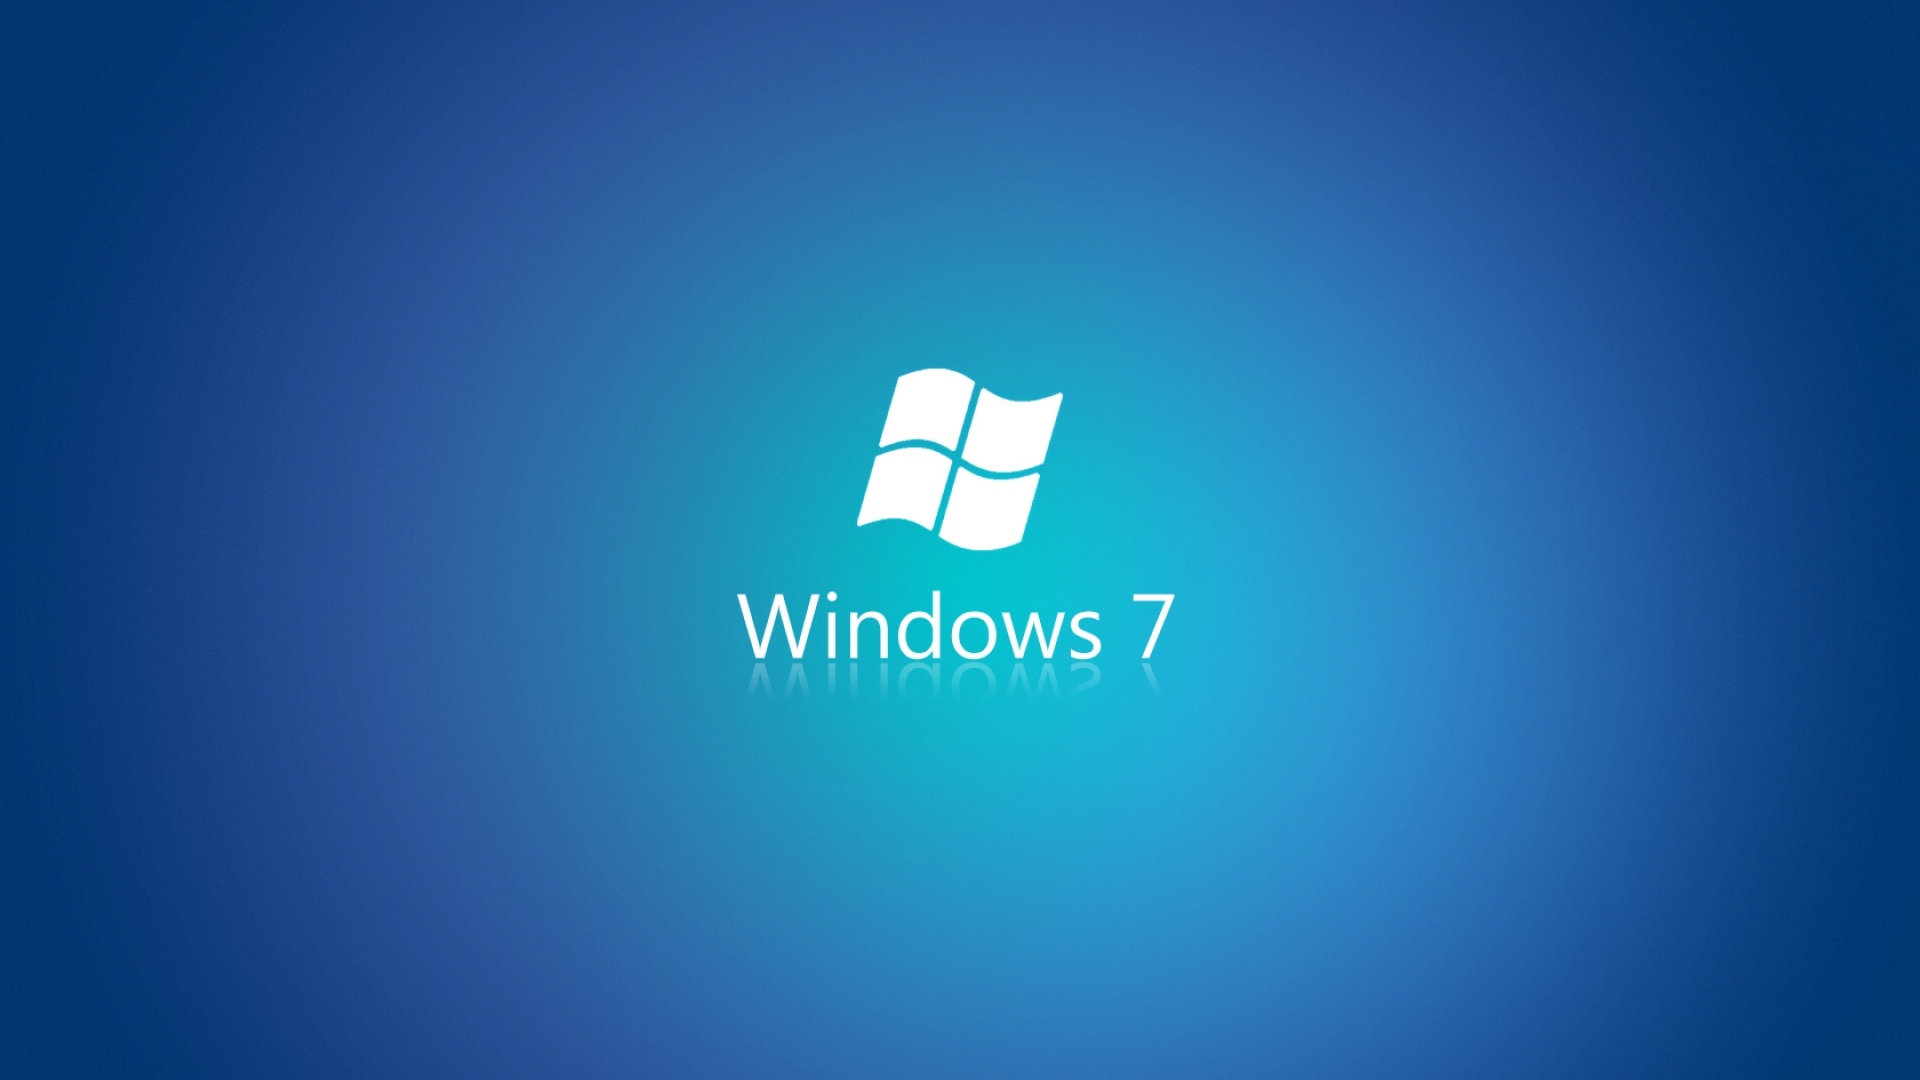 Windows 7 Logos